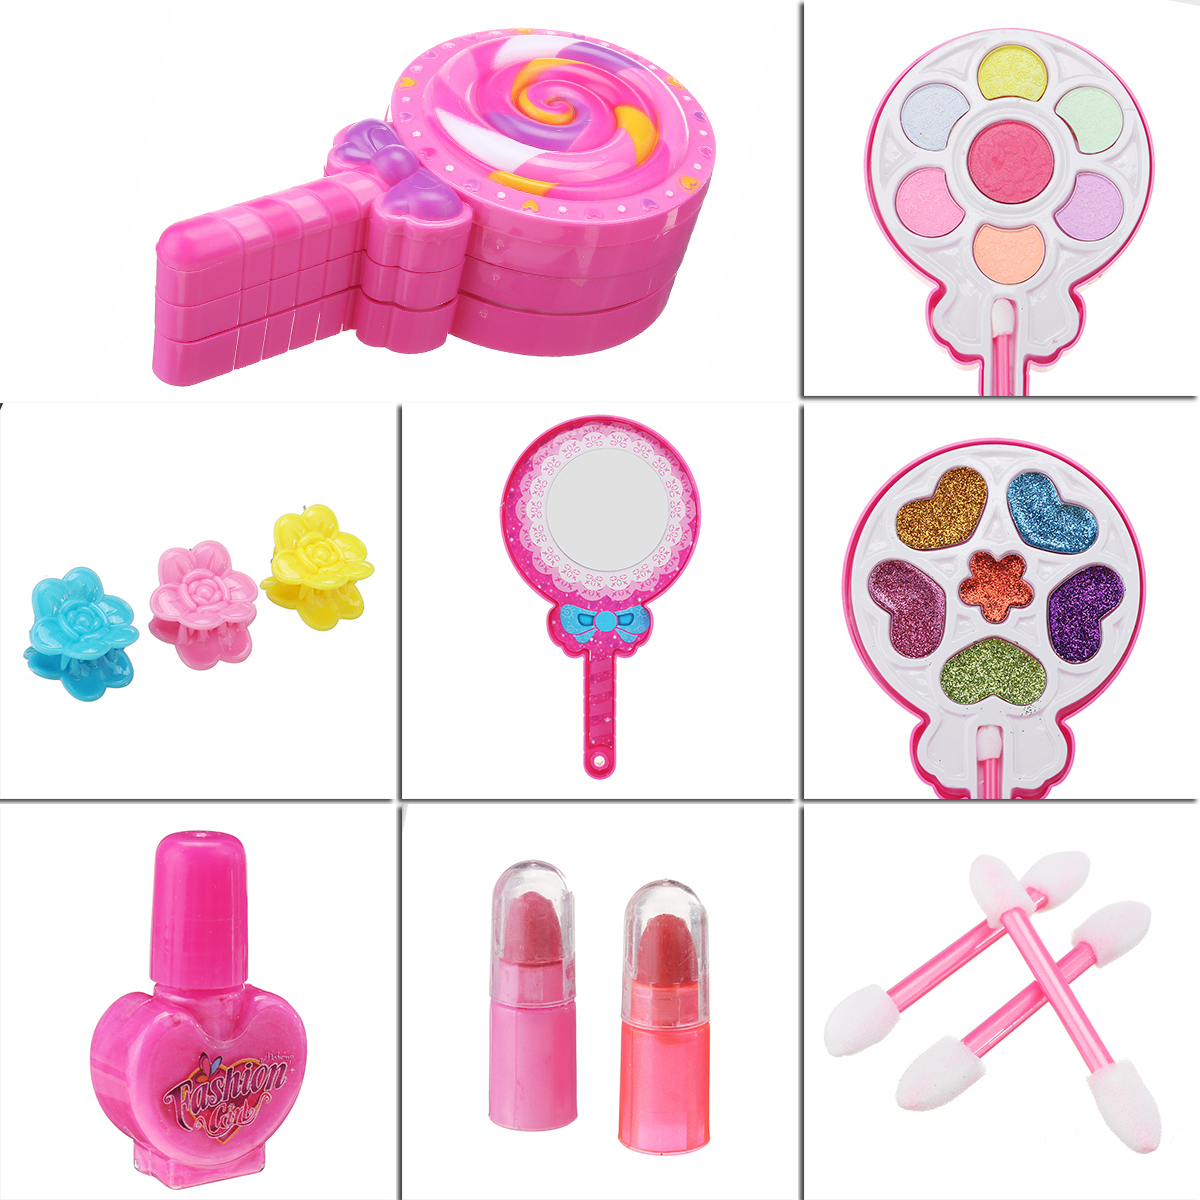 Girls-Make-Up-Toy-Set-Lollipop-Shaped-Princess-Pink-Beauty-Cosmetics-Compact-Kids-Gift-1830188-5